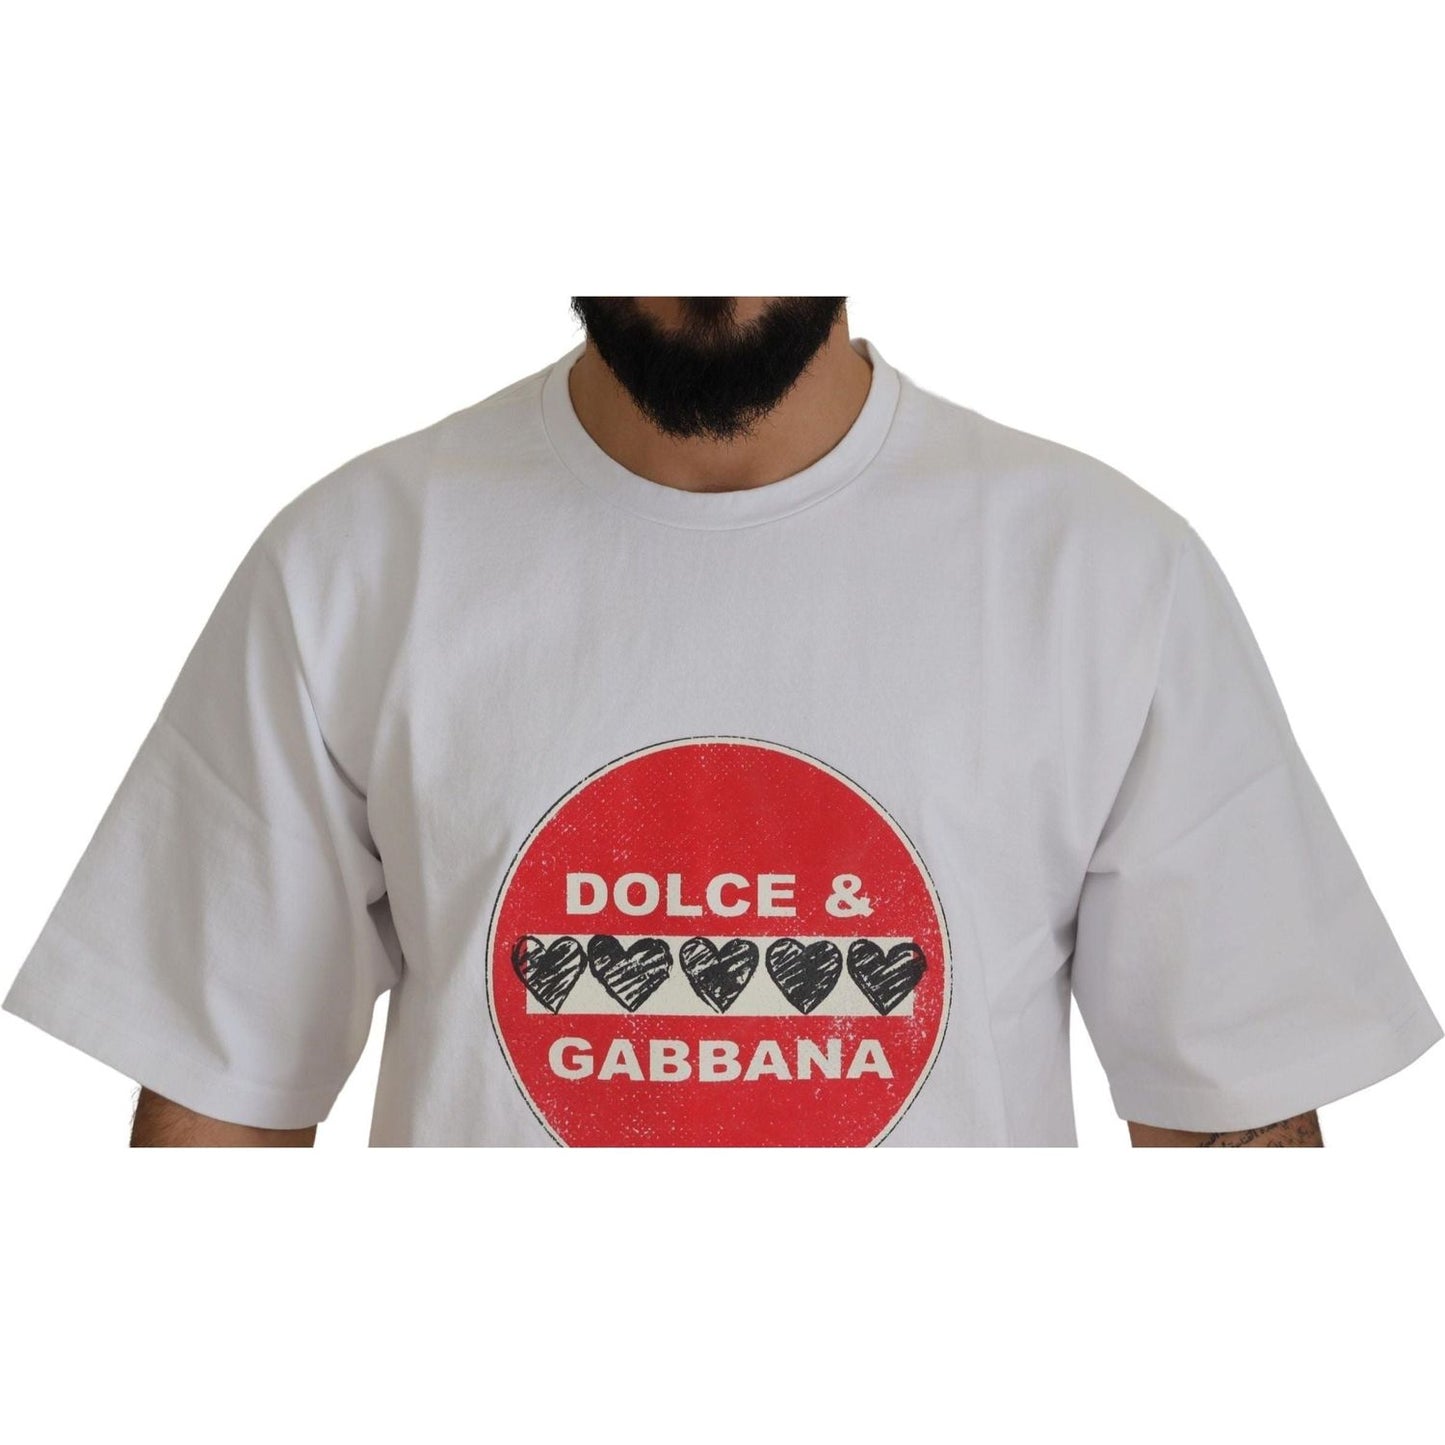 Dolce & Gabbana Chic White Cotton Heart Amor T-shirt white-amor-heart-cotton-crewneck-t-shirt IMG_0178-scaled-b08a1fd9-c06.jpg